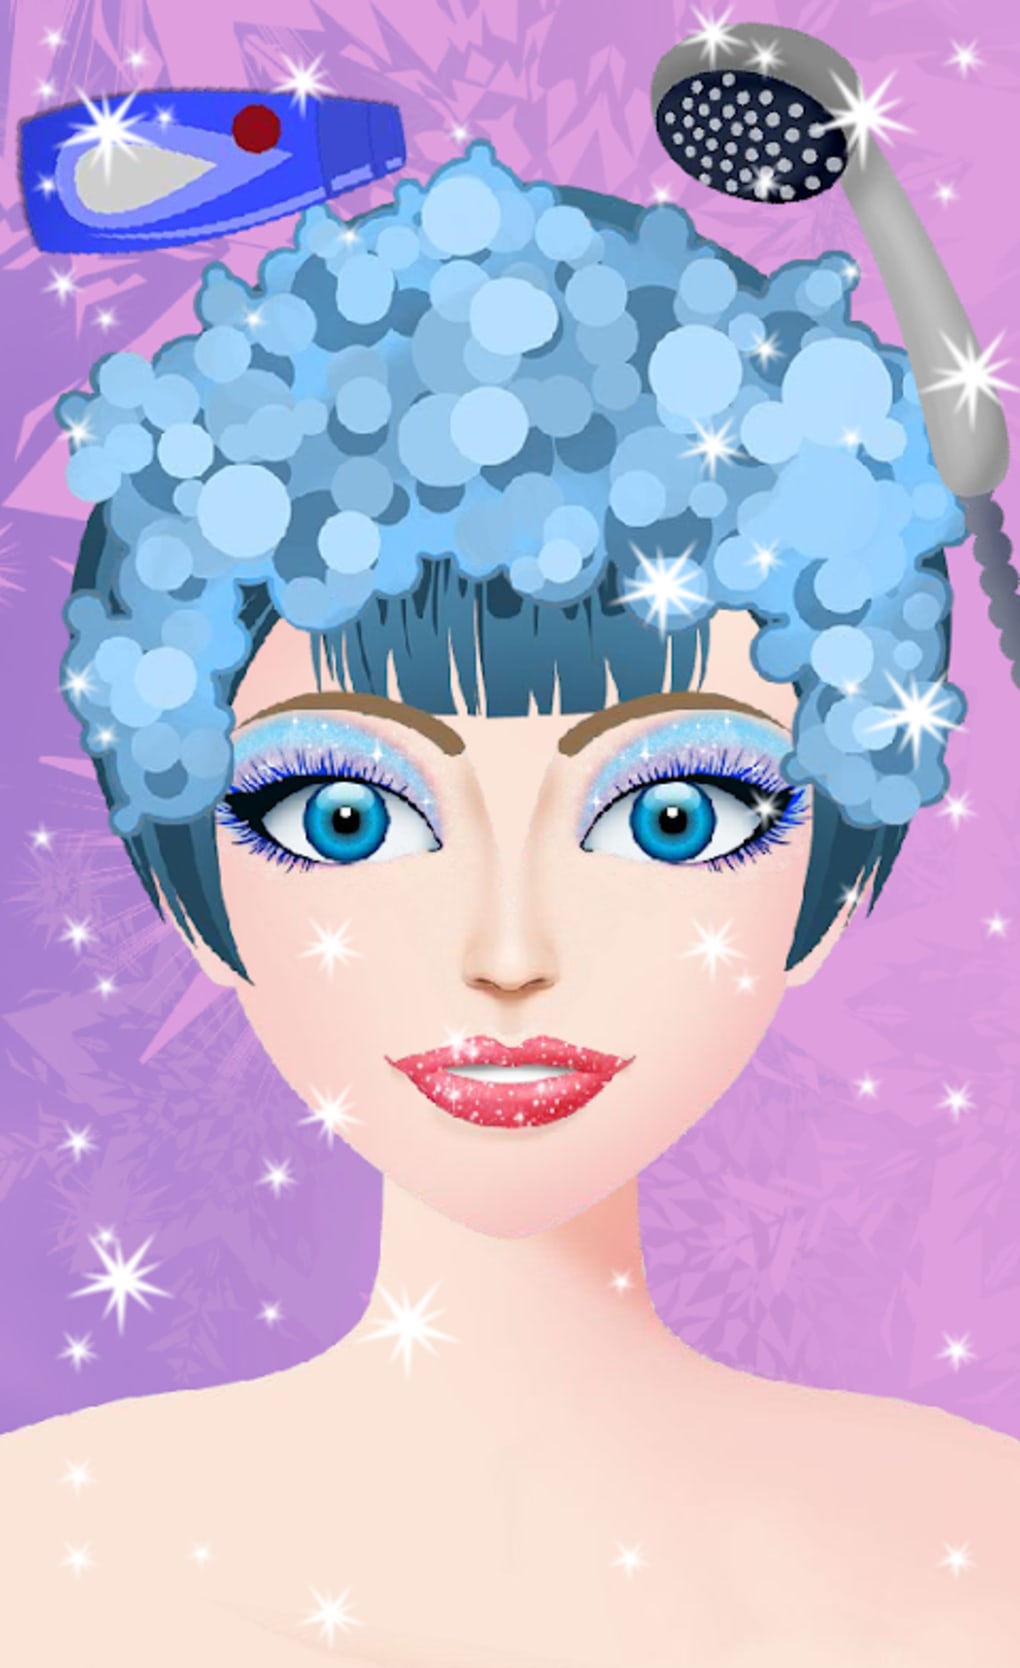 Princess Makeup Salon Games APK for Android - Download